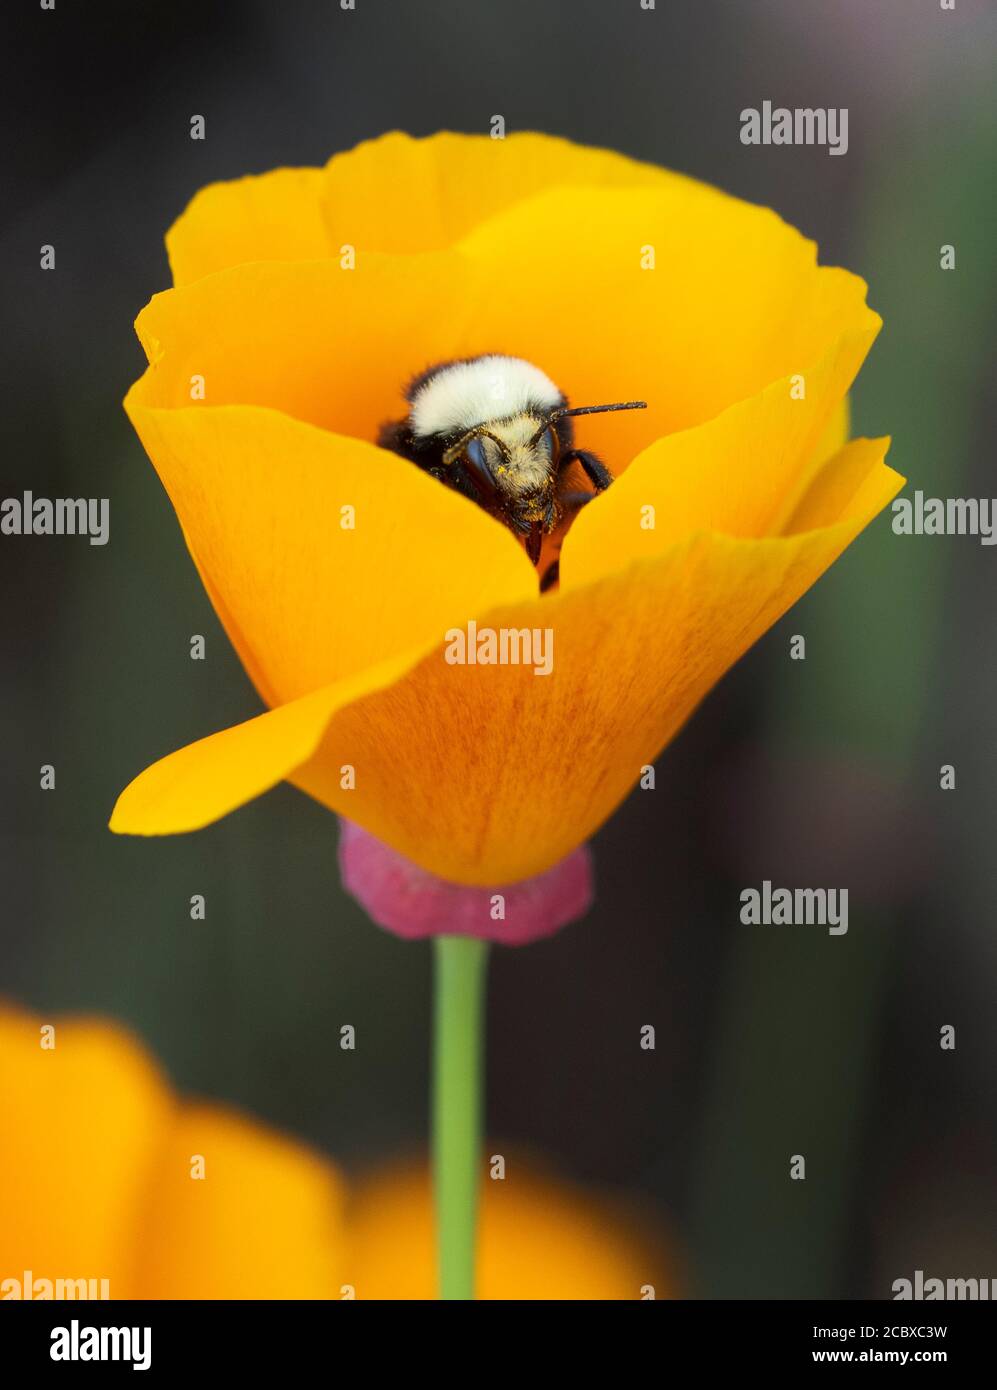 Yellow-faced Bumble Bee (Bombus vosnesenskii) gathering pollen in California Poppy flower Stock Photo